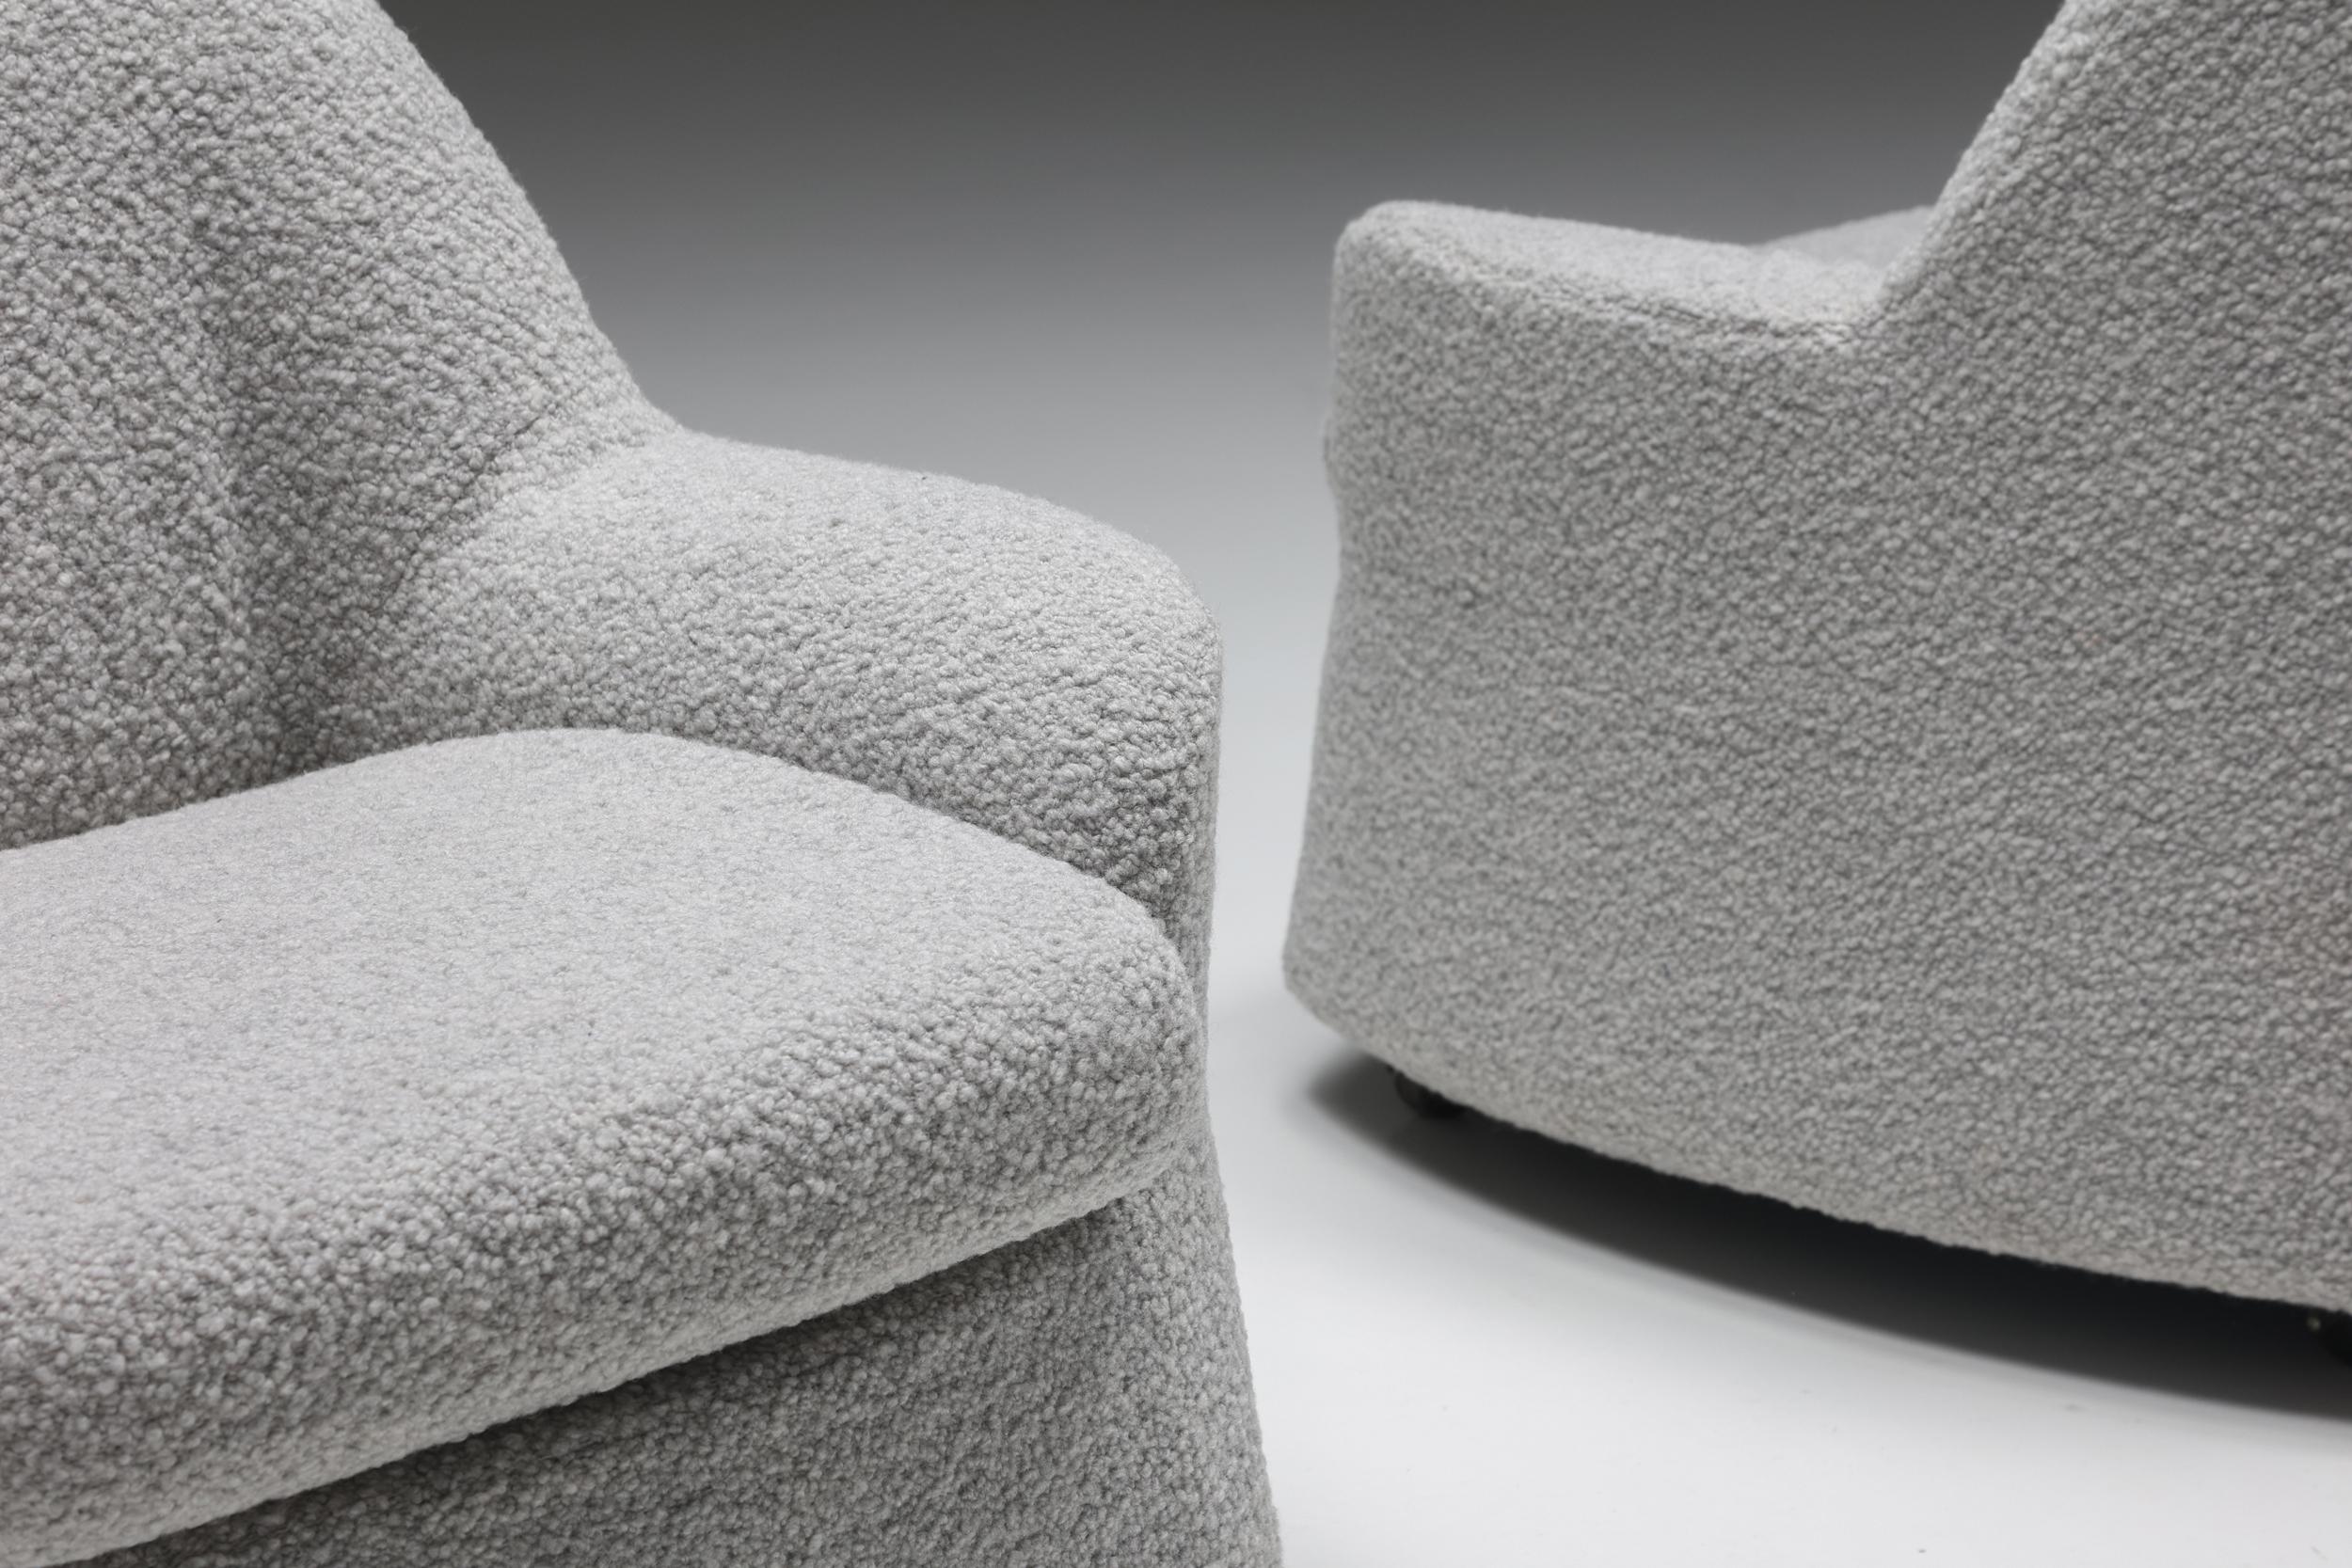 Scarpa lounge chairs grey boucle´, Italian Design, Mid-Century Modern, 1960's

Afra & Tobia Scarpa set of lounge chairs in grey bouclé wool. A rare find in the Italian Scarpa oeuvre, created in the 1960s. Upholstered in grey bouclé wool, a